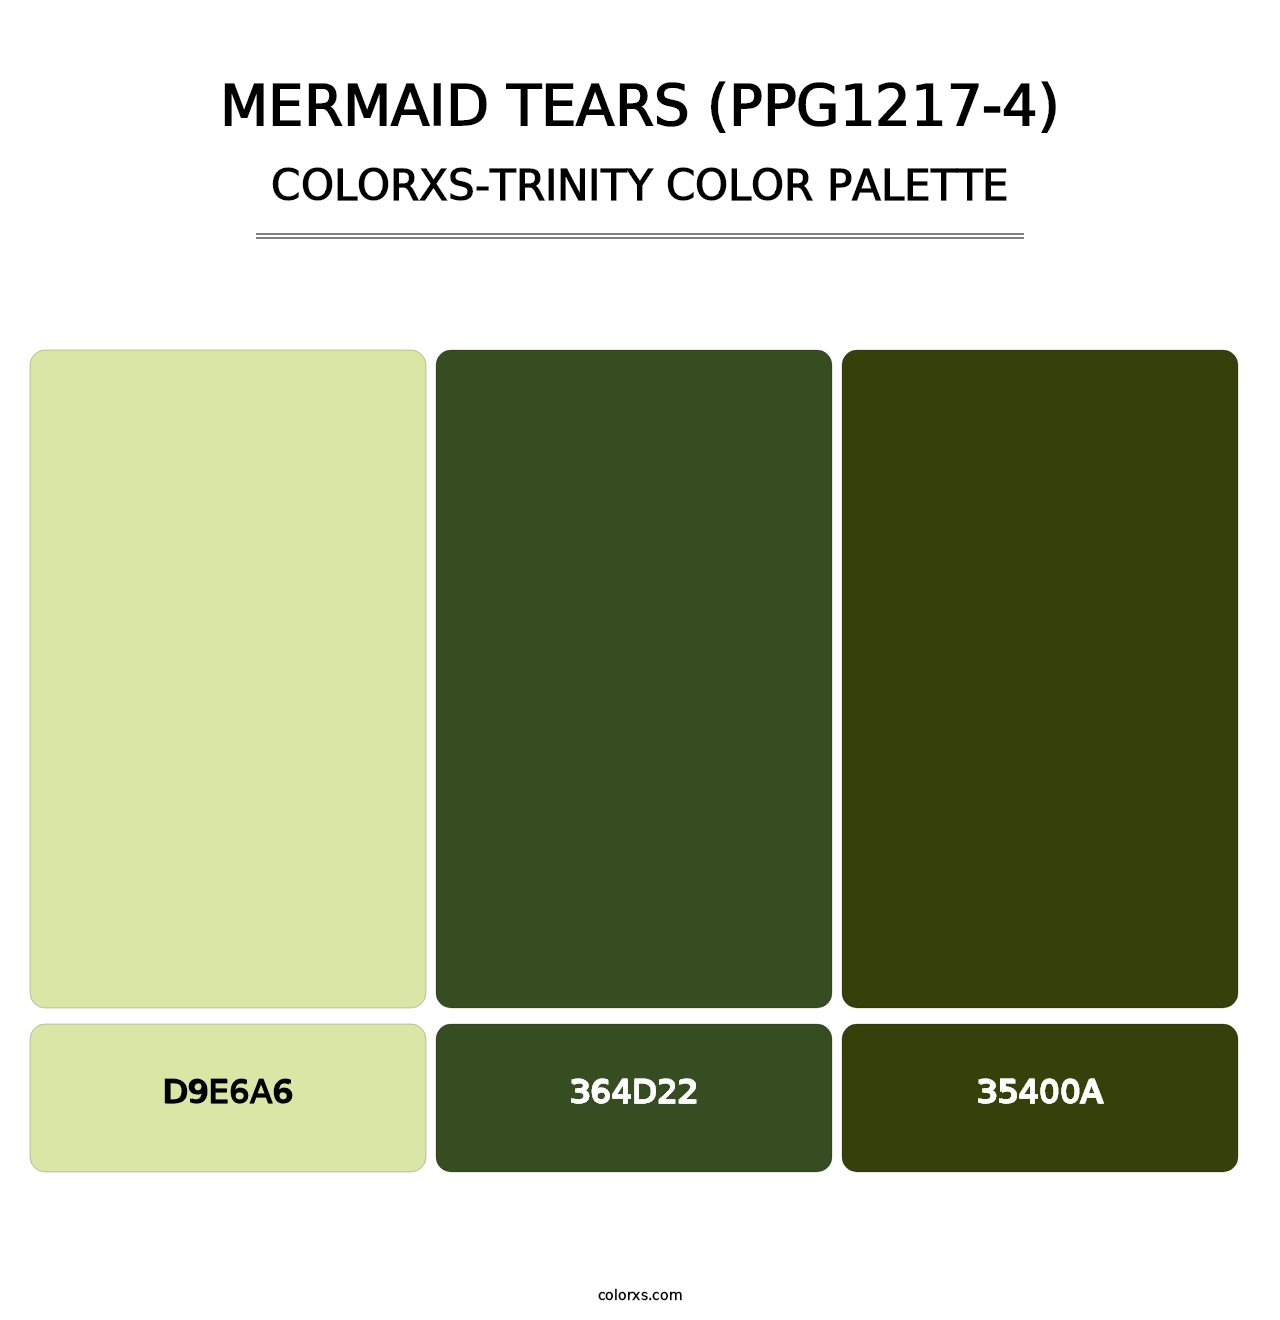 Mermaid Tears (PPG1217-4) - Colorxs Trinity Palette